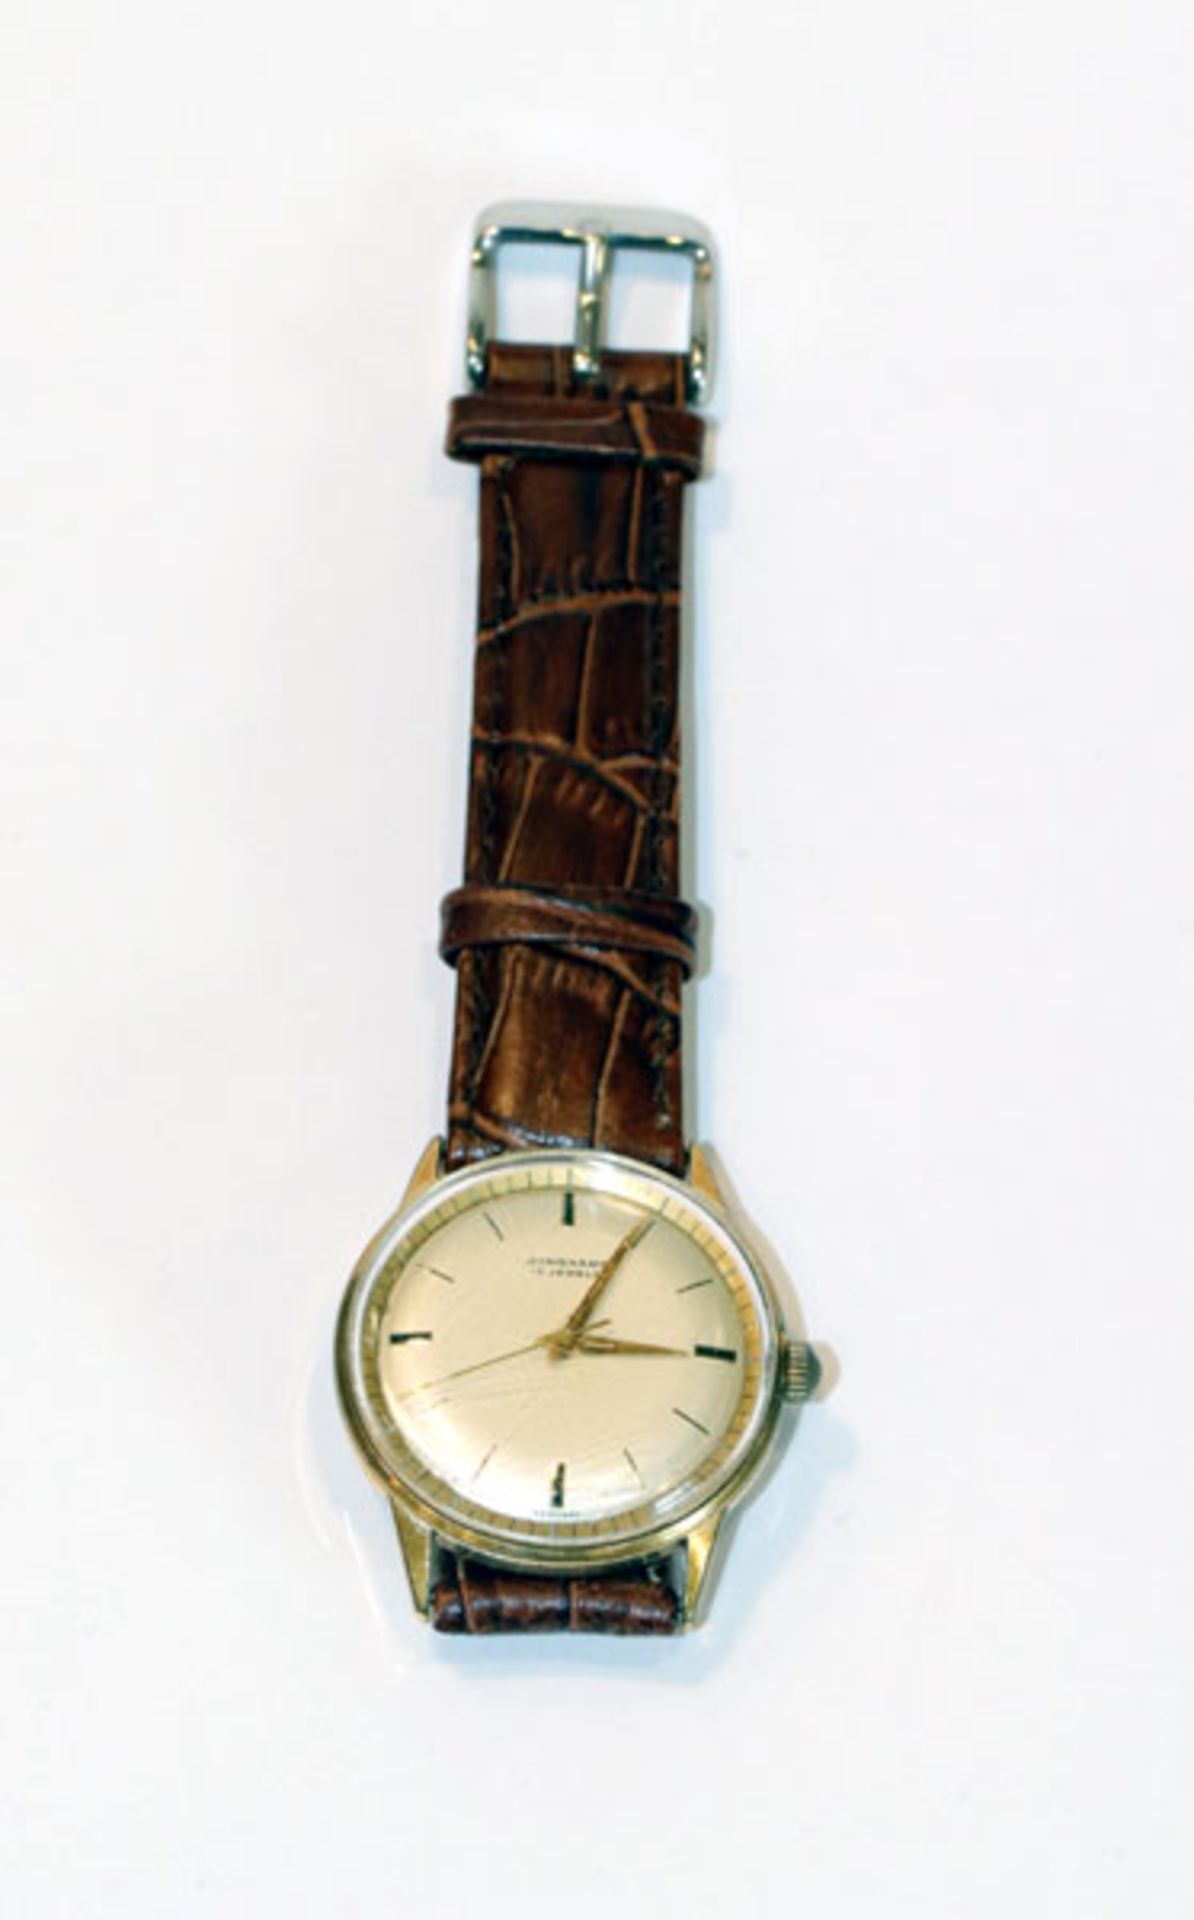 Junghans Herren-Armbanduhr um 1960, intakt, Tragespuren, an braunem, neuwertigem Armband